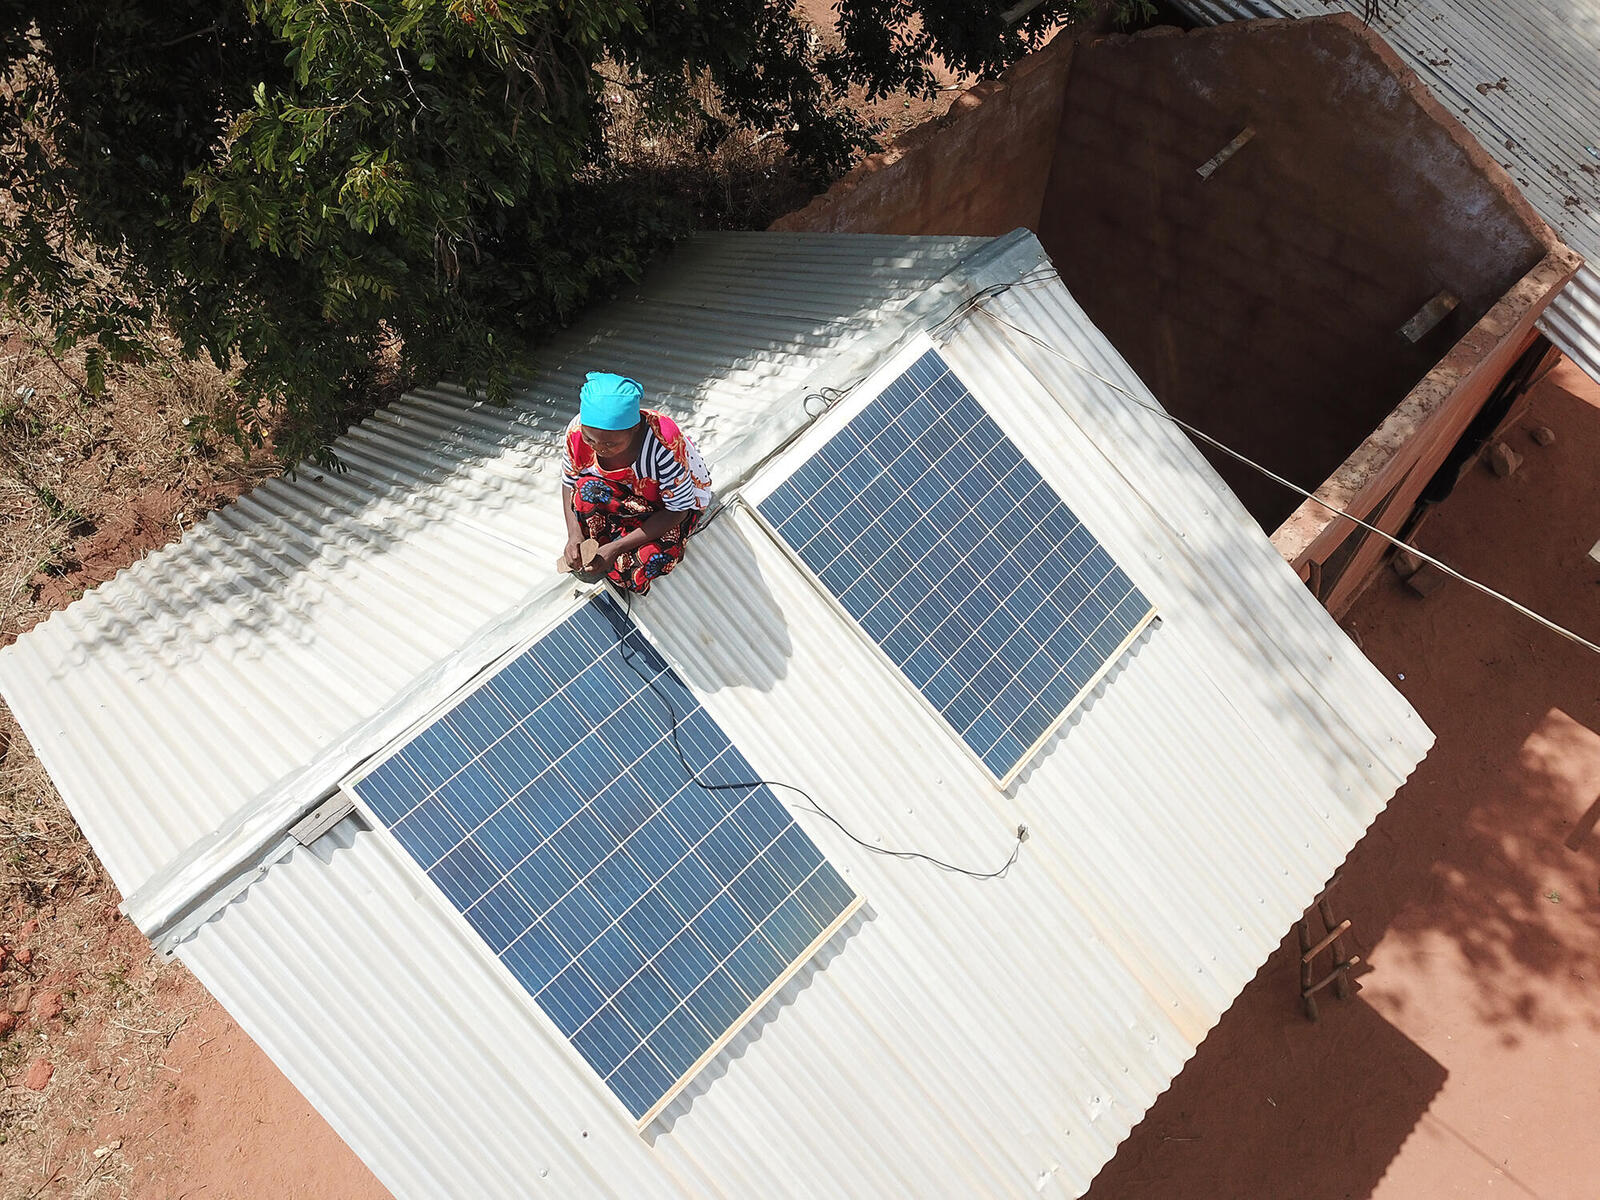 Woman on roof adjusting solar panels